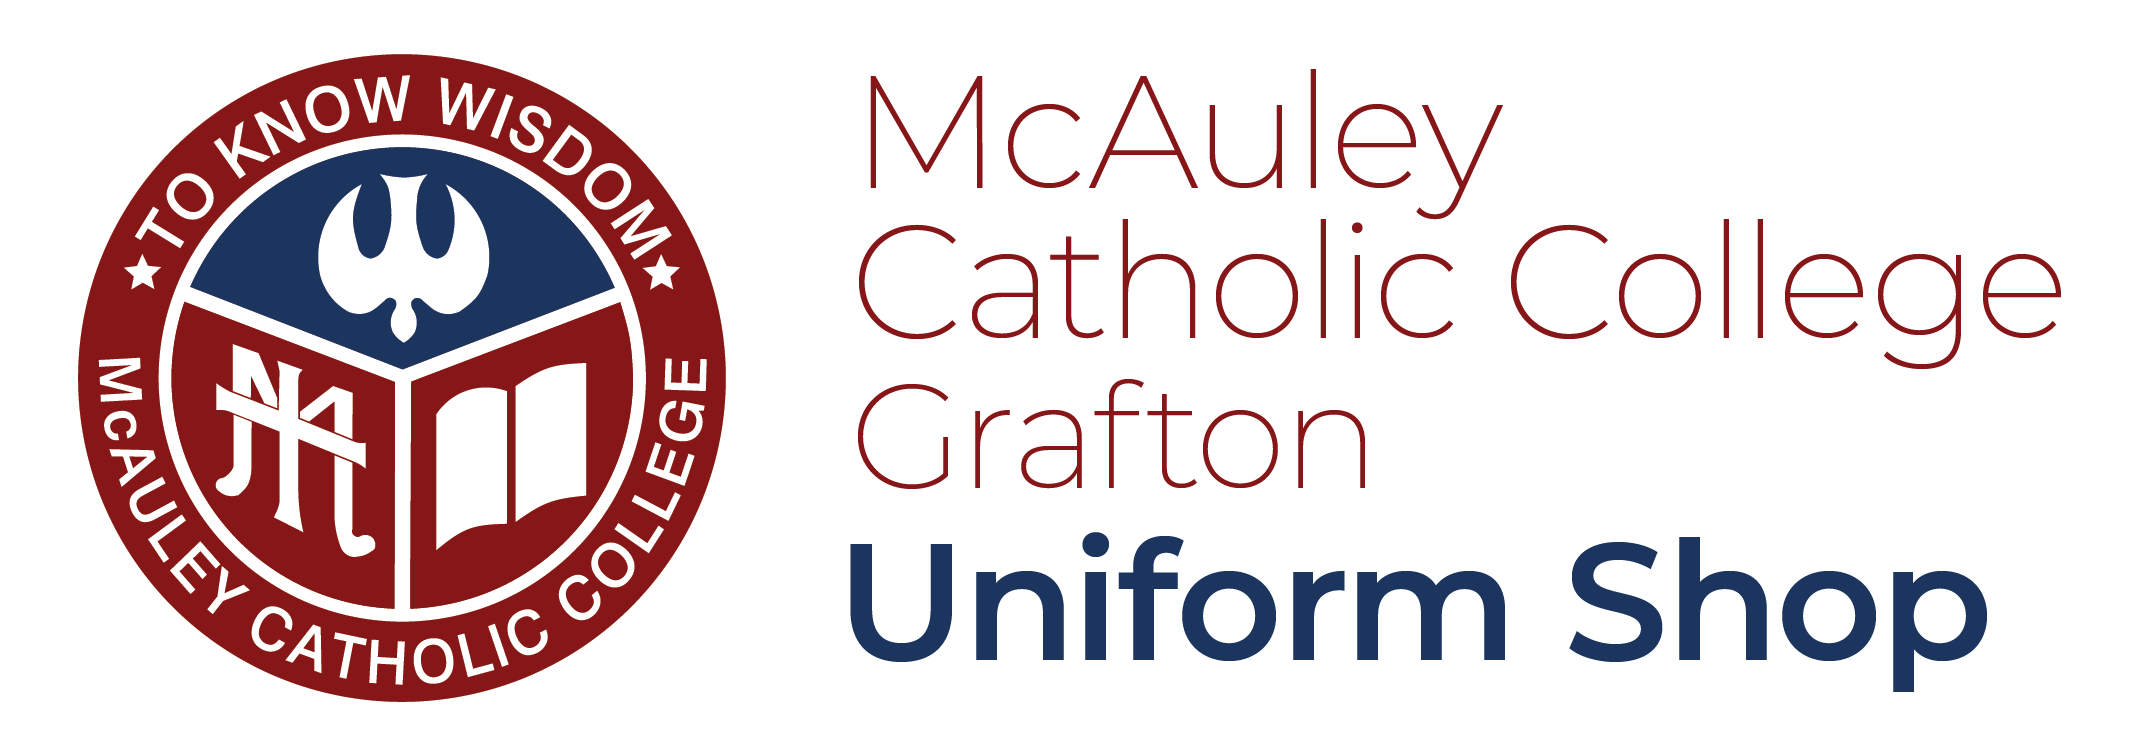 McAuley Catholic College (Grafton) Uniform Shop